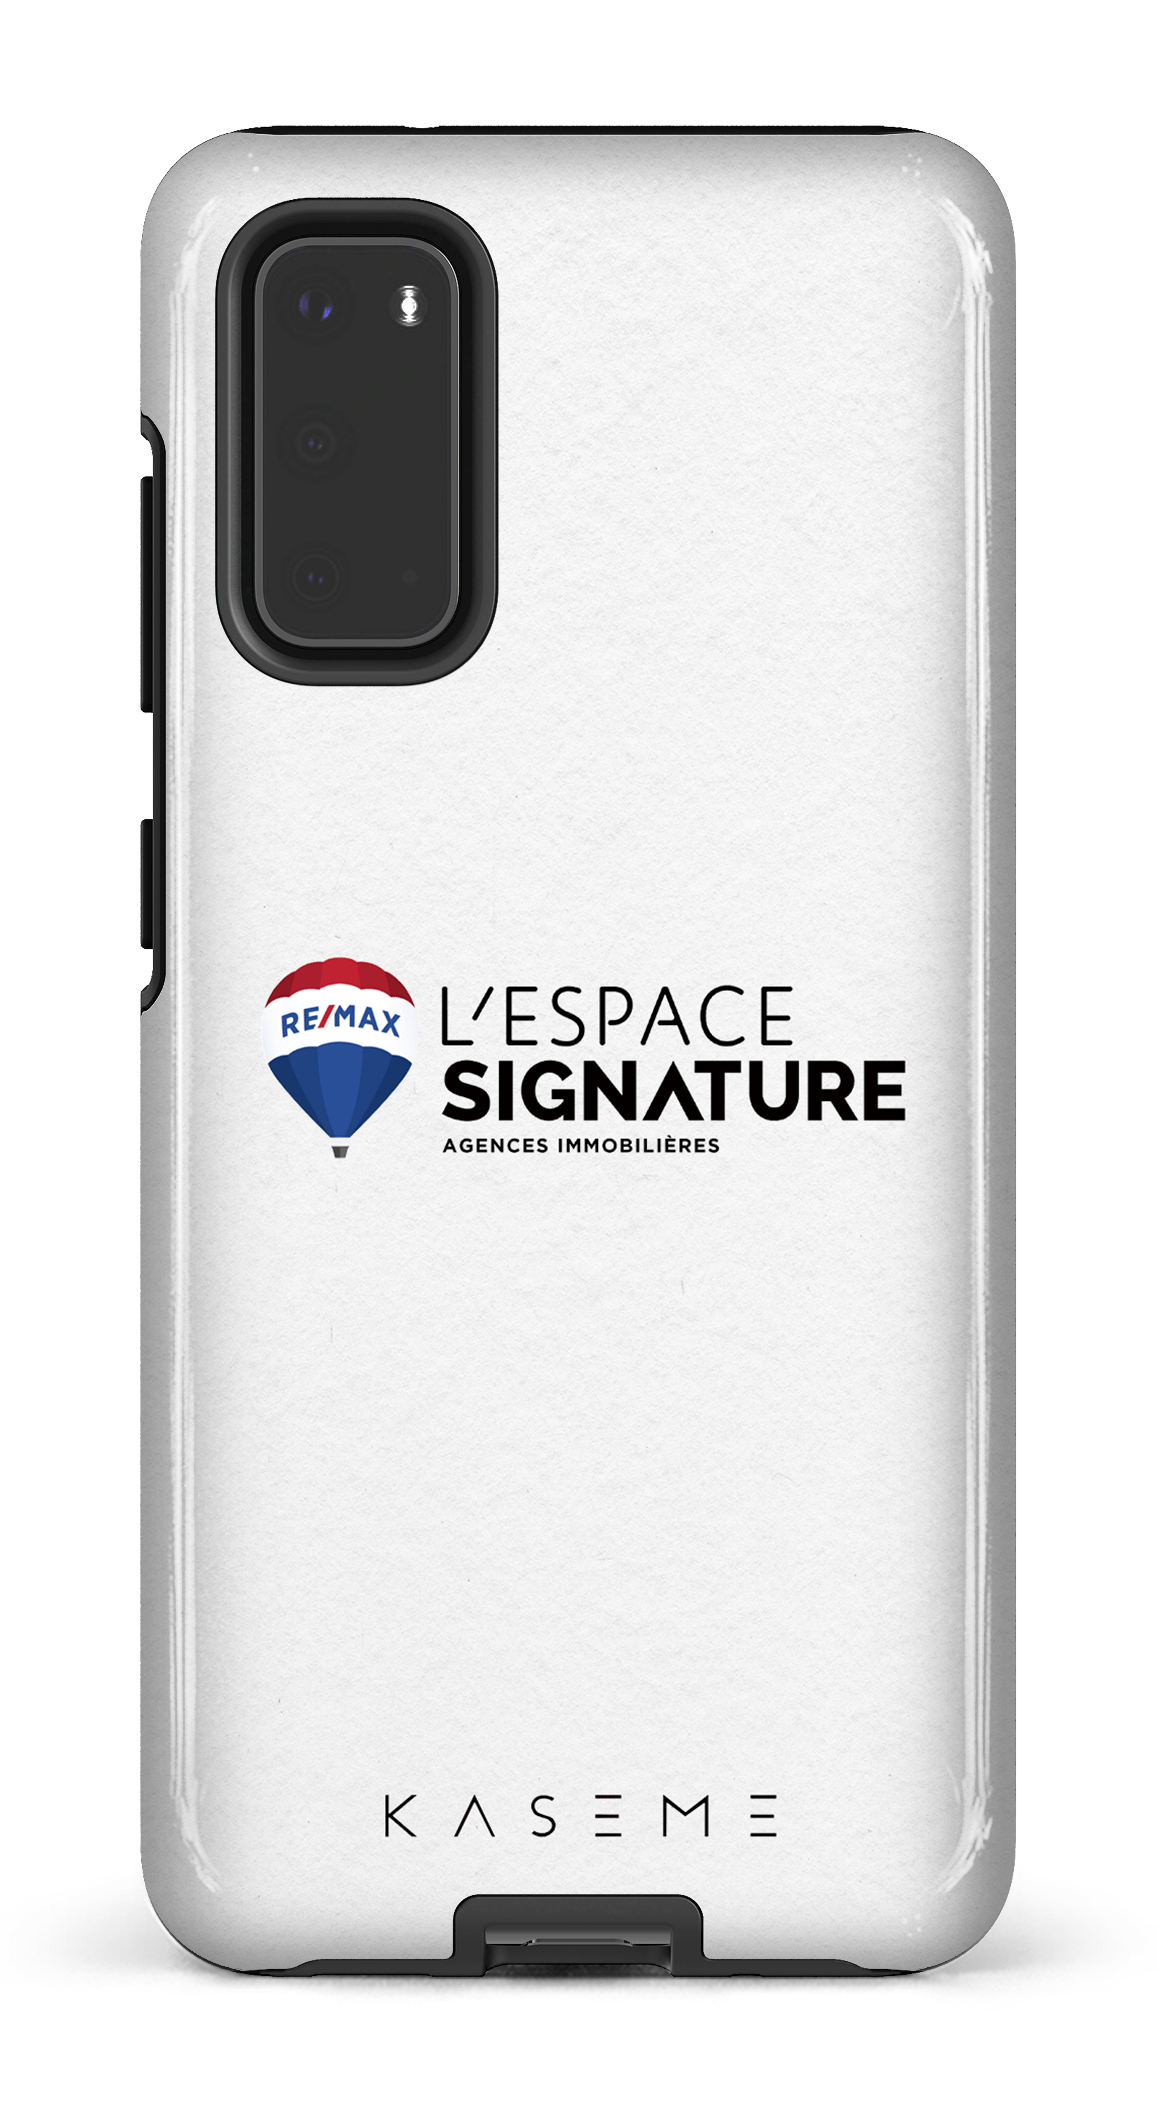 Remax Signature L'Espace Blanc - Galaxy S20